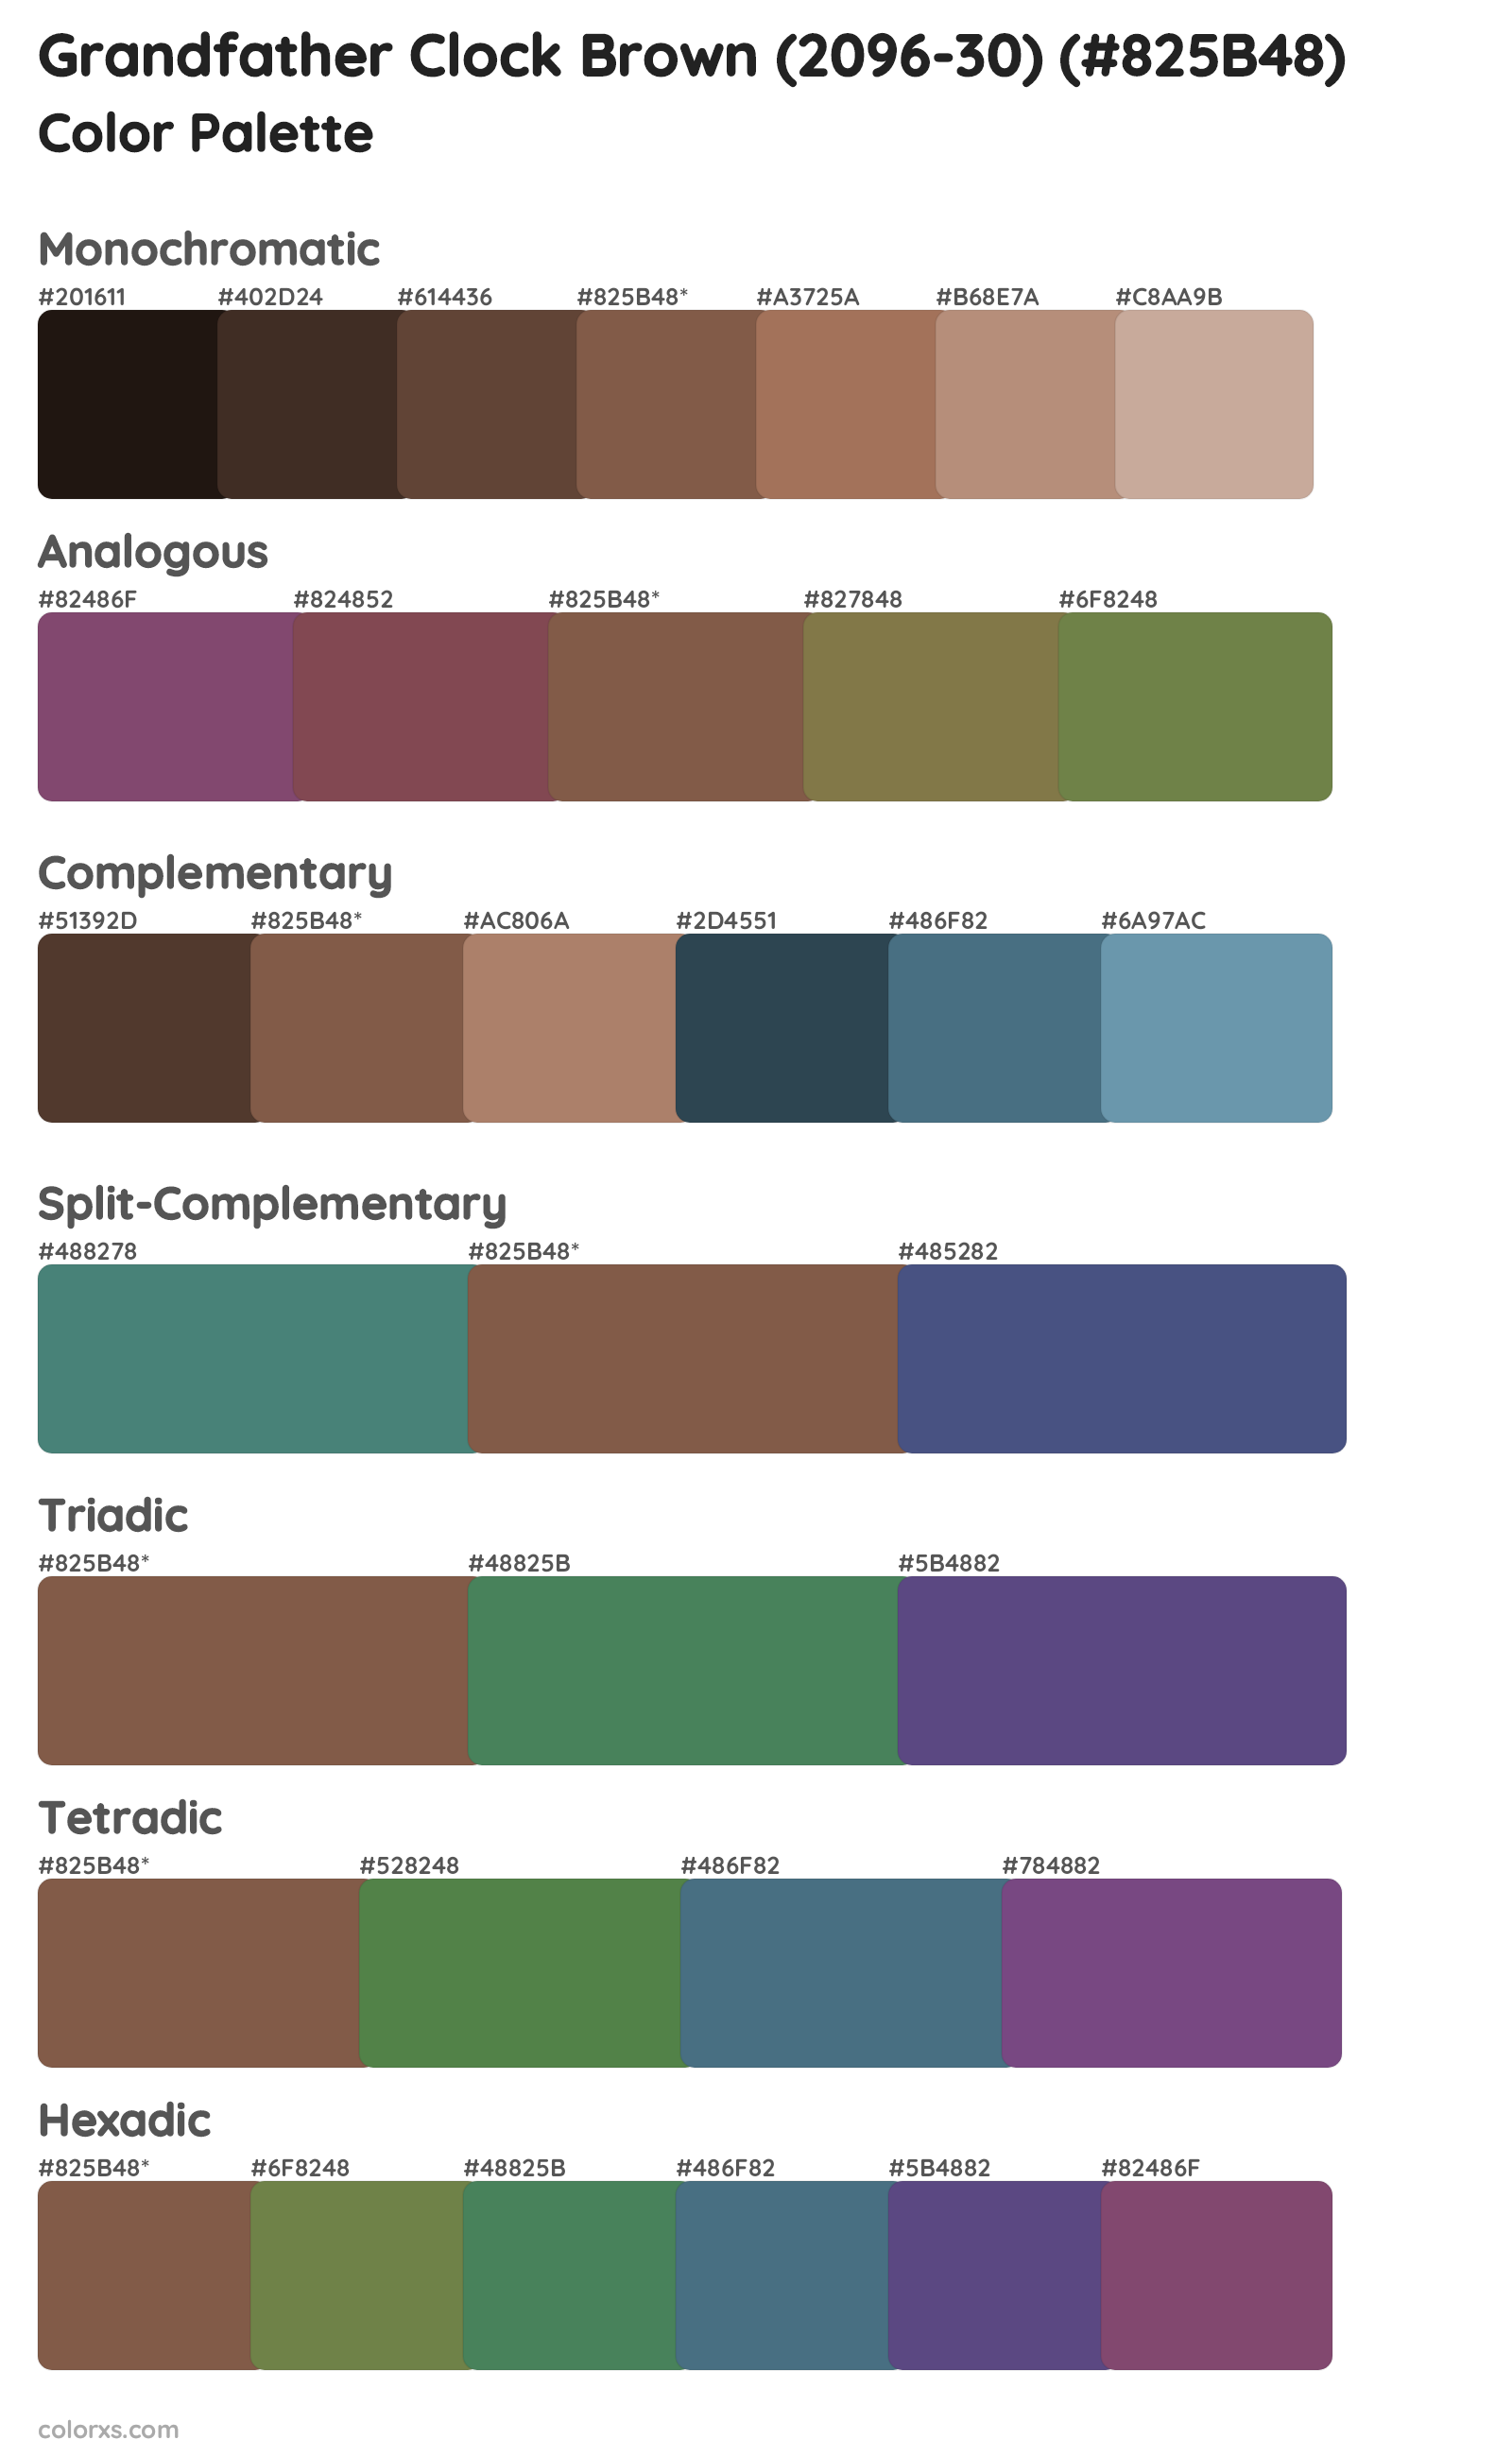 Grandfather Clock Brown (2096-30) Color Scheme Palettes